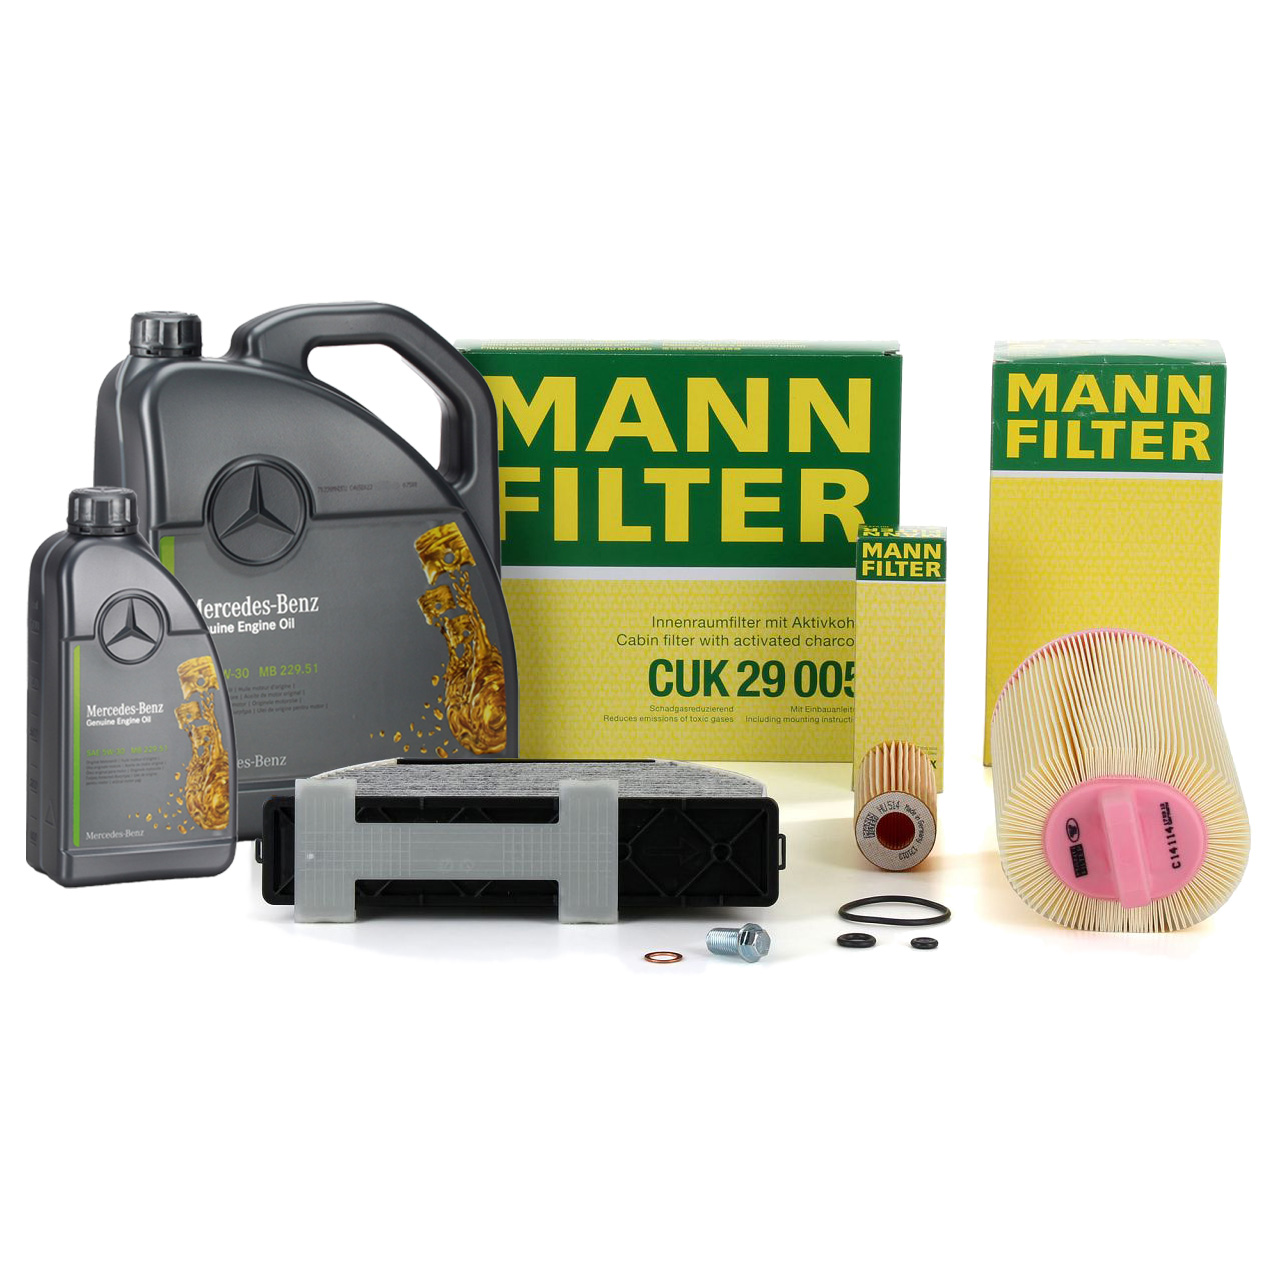 MANN Filterset + 6L ORIGINAL 5W30 Motoröl MERCEDES W204 S204 C180 C200 W212 E200NGT M271